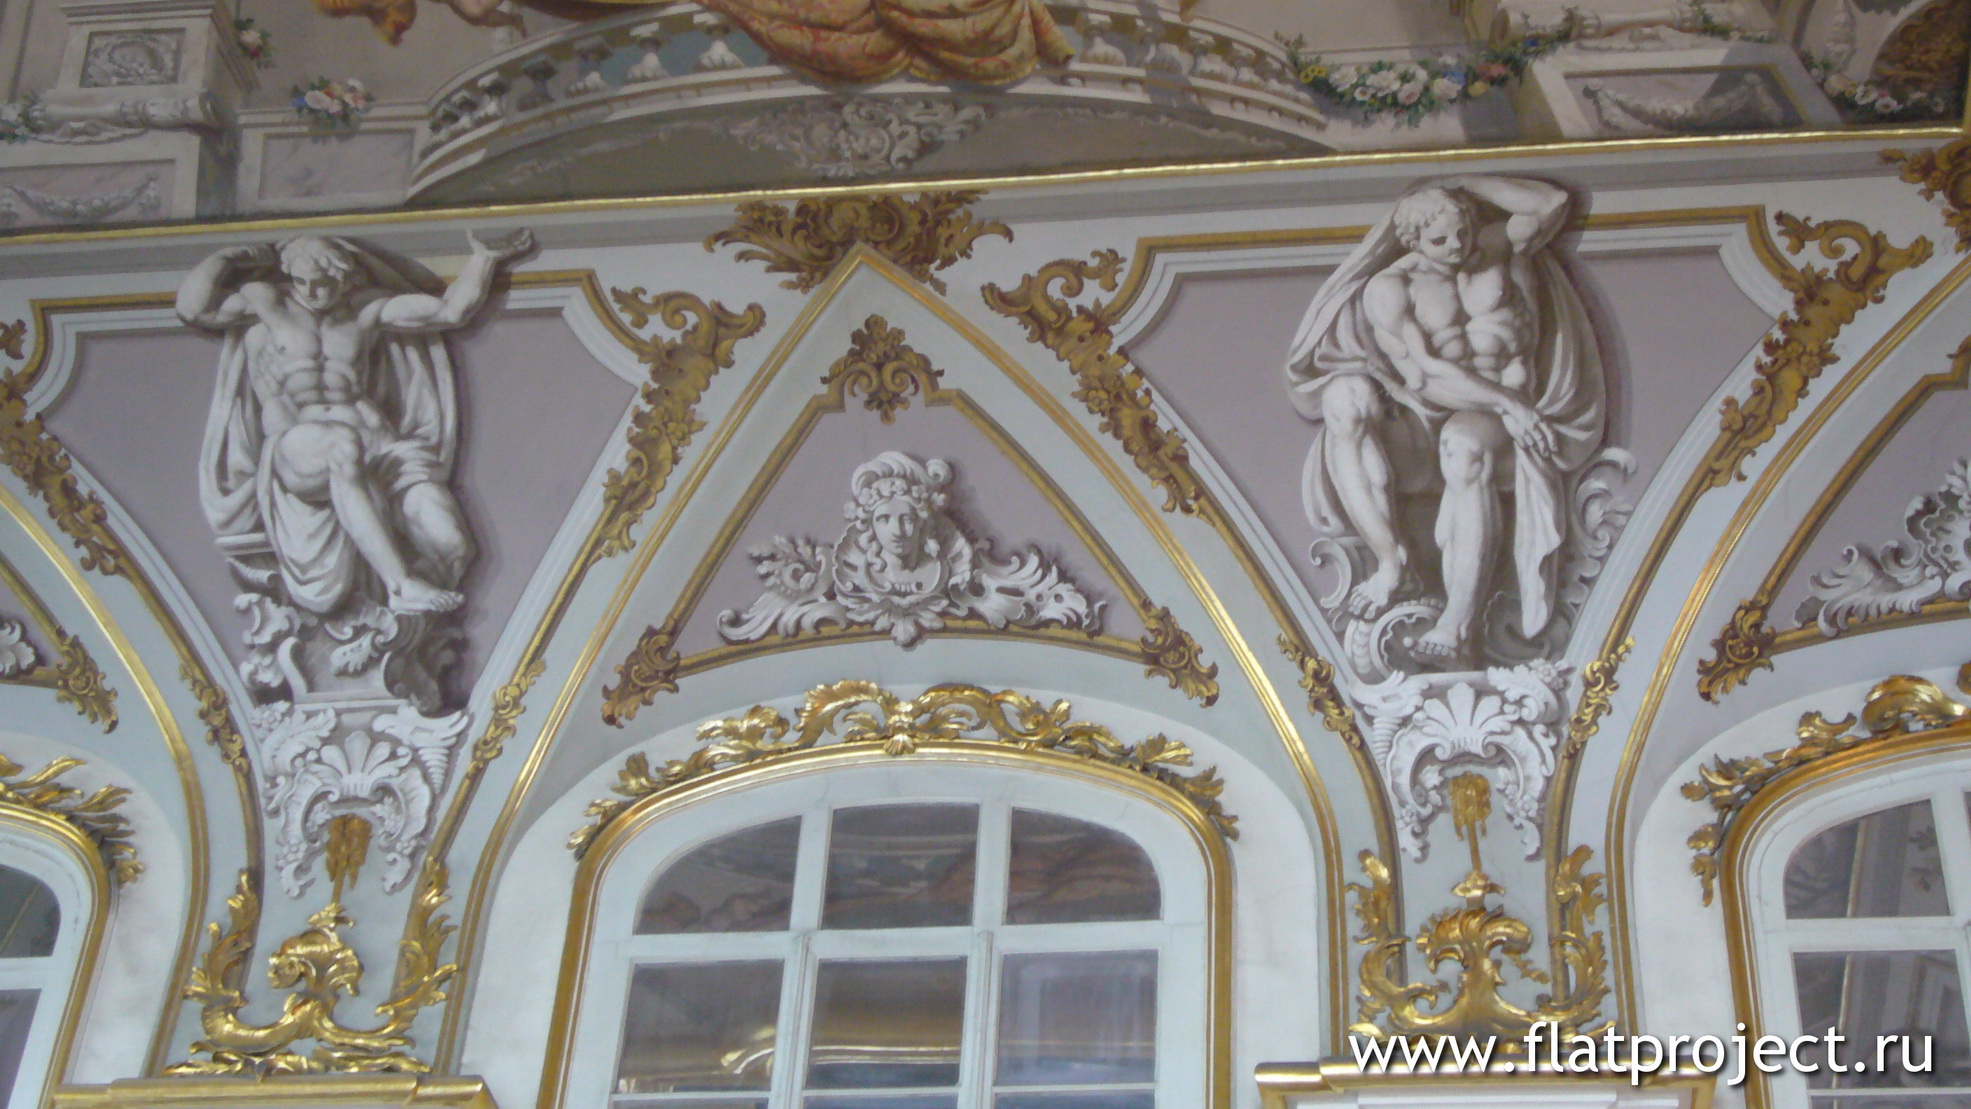 The State Hermitage museum interiors – photo 96